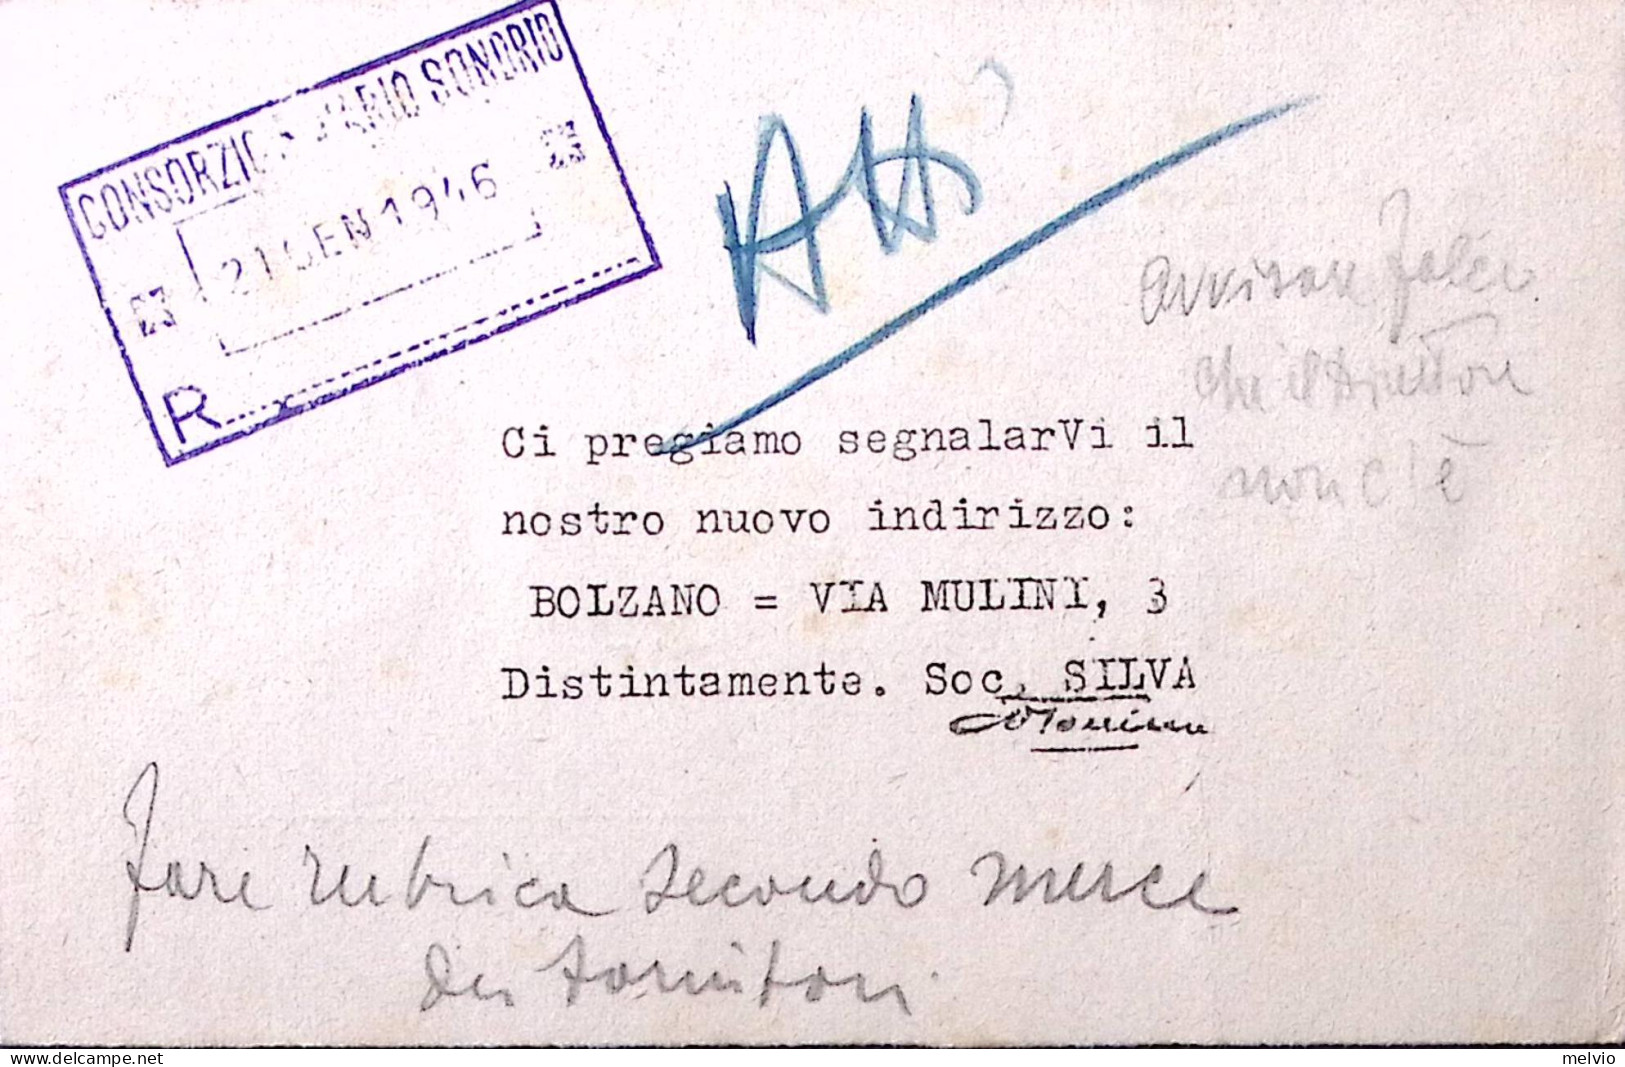 1945-Democratica C.40 (546) Isolato Su Cart. Stampe - Marcophilie